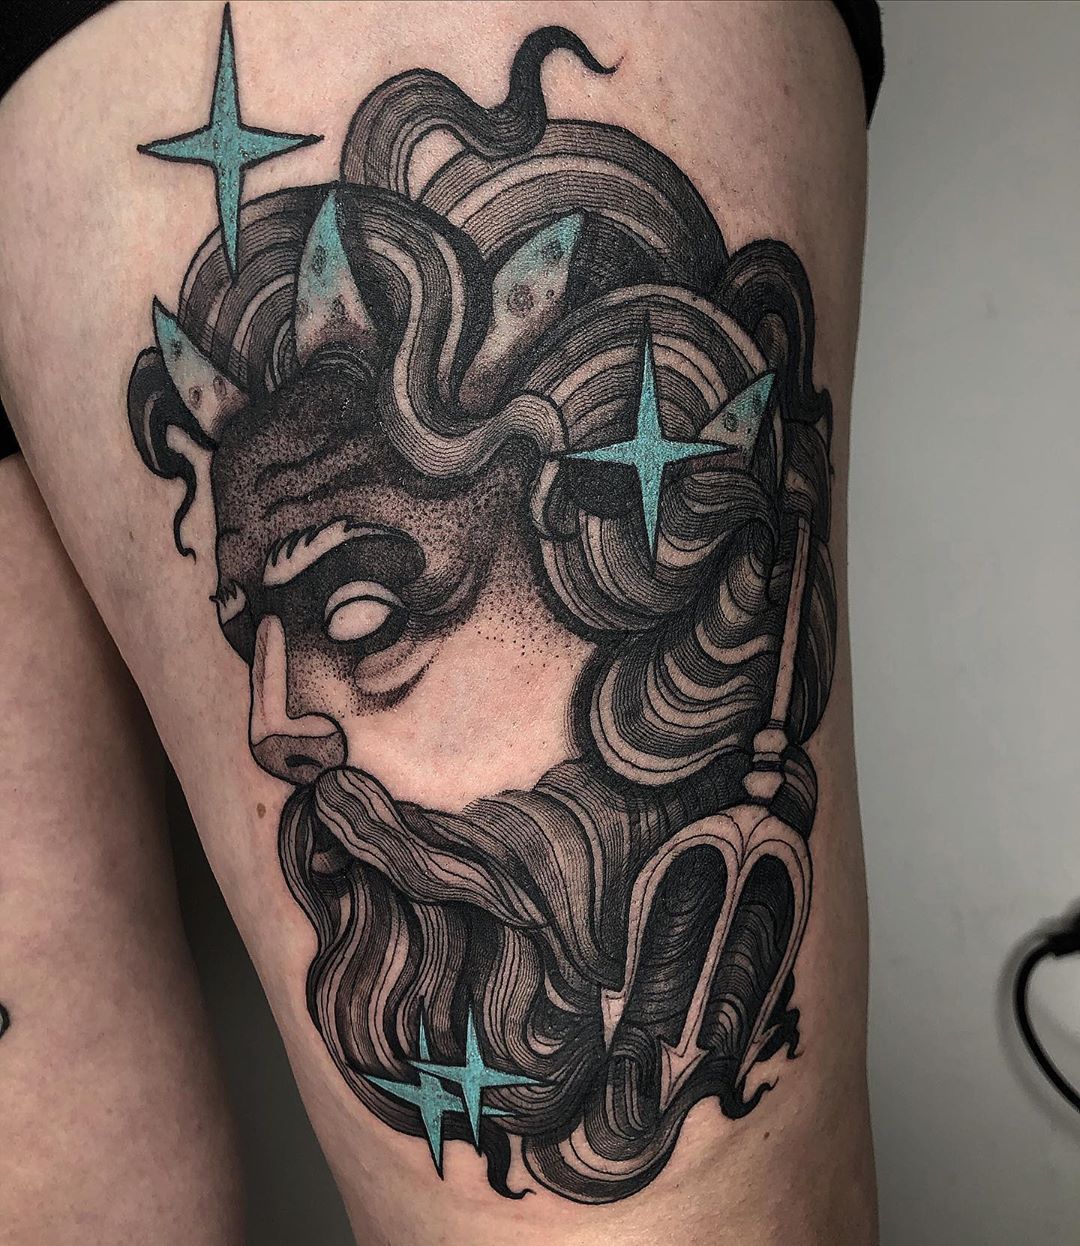 Poseidon tattoo meaning is pretty... - Elysian Tattoo Studio | Facebook